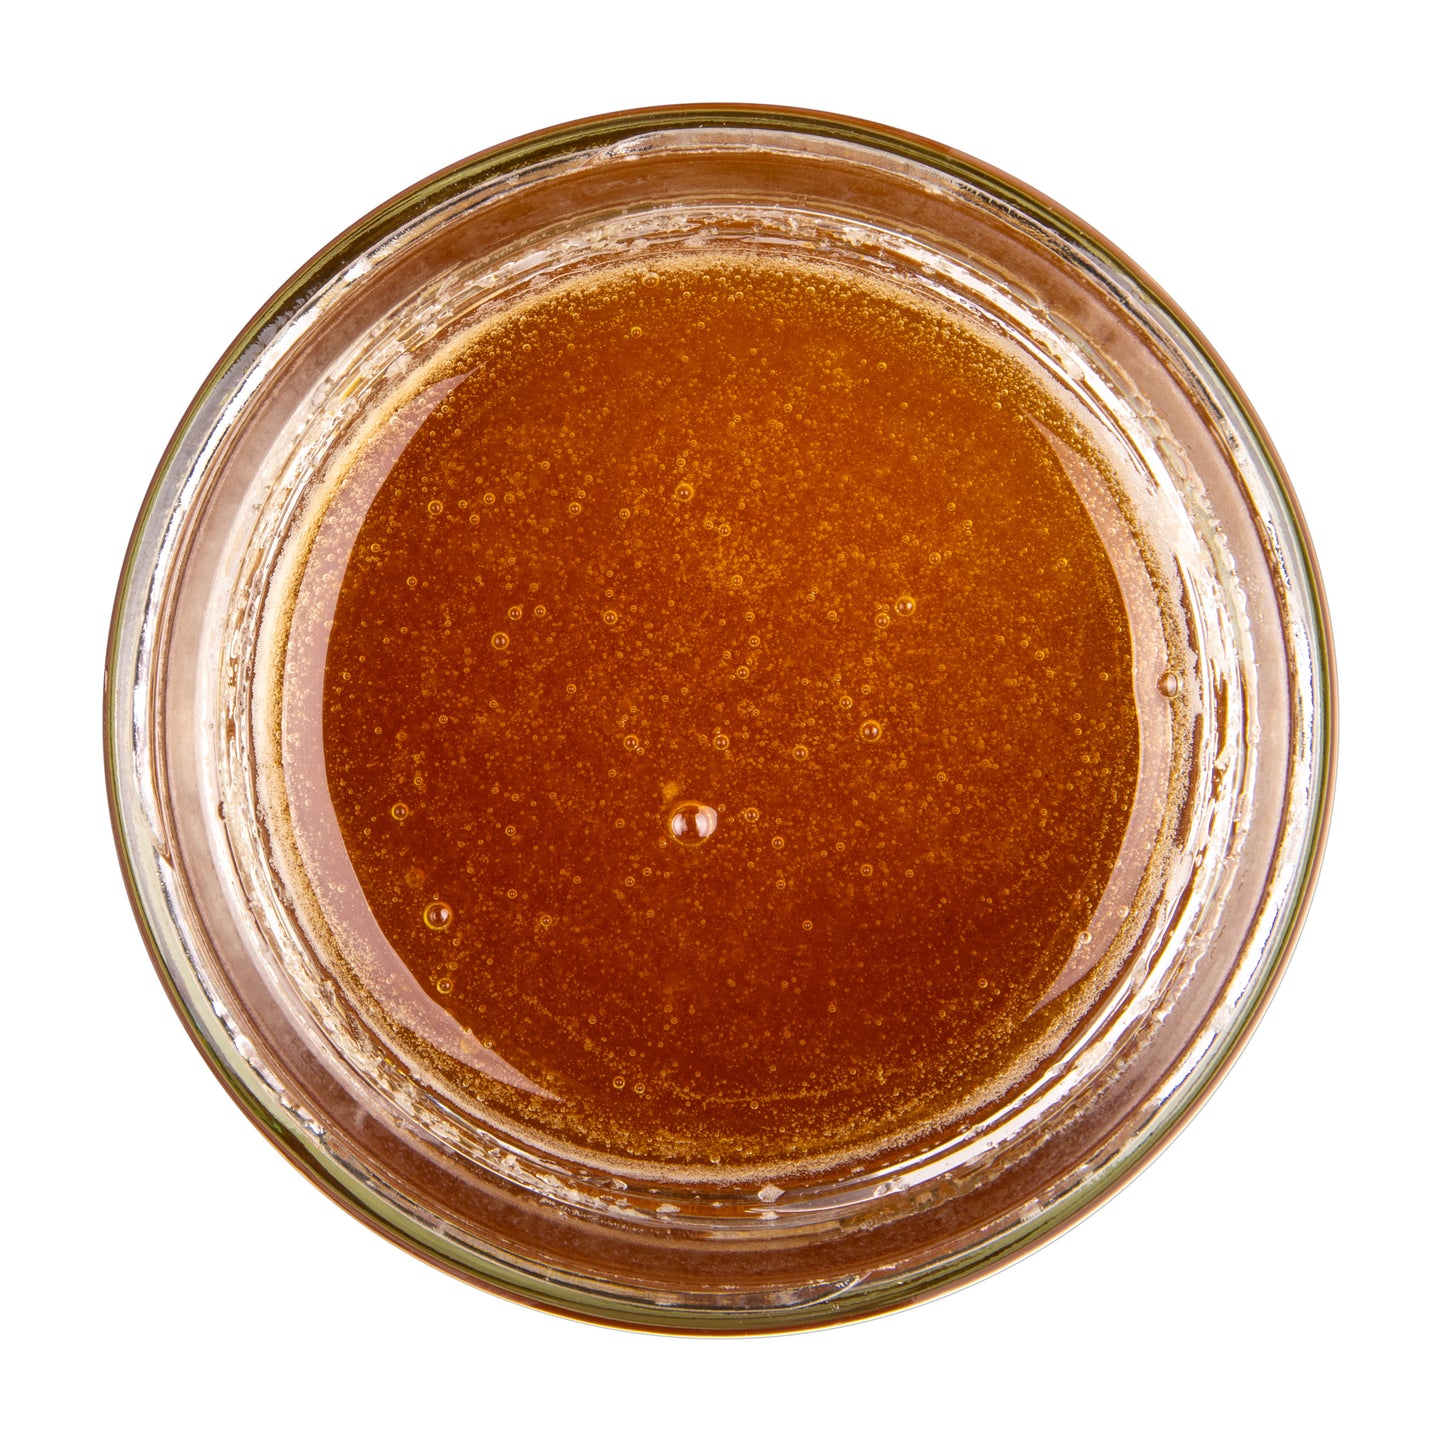 Latin Honey Shop 10+ aktiver roher Bio-Orangenblütenhonig aus Mexiko